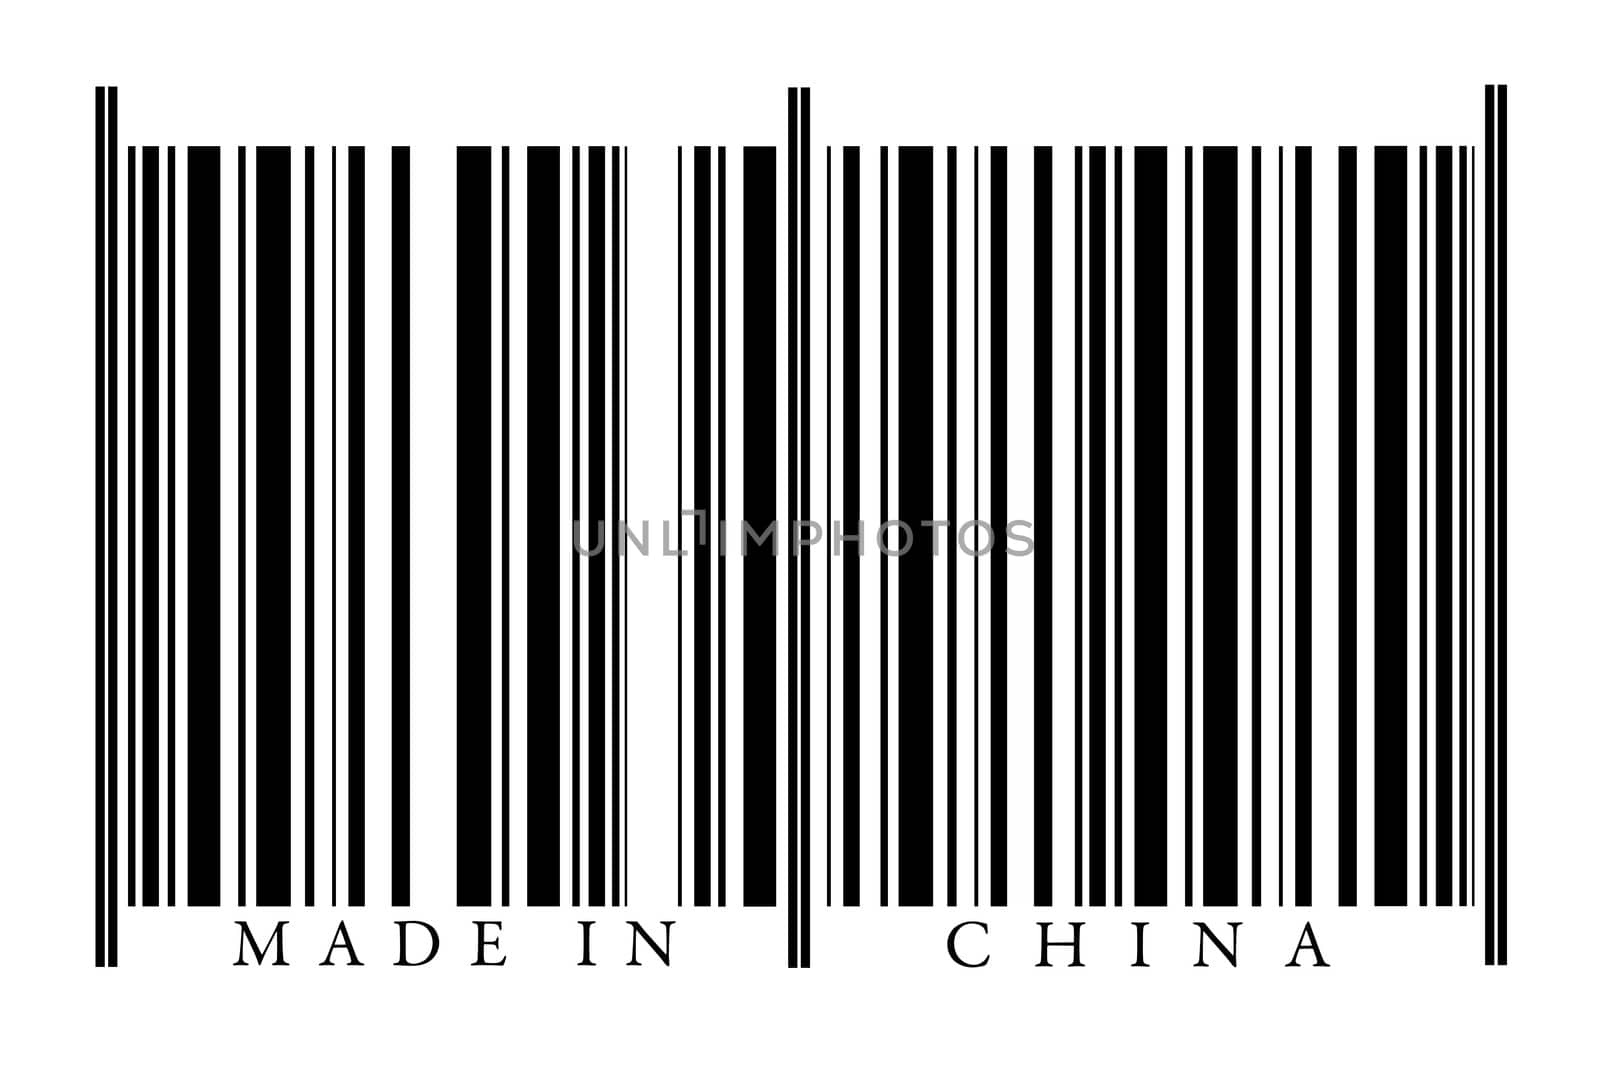 China Barcode by gemenacom